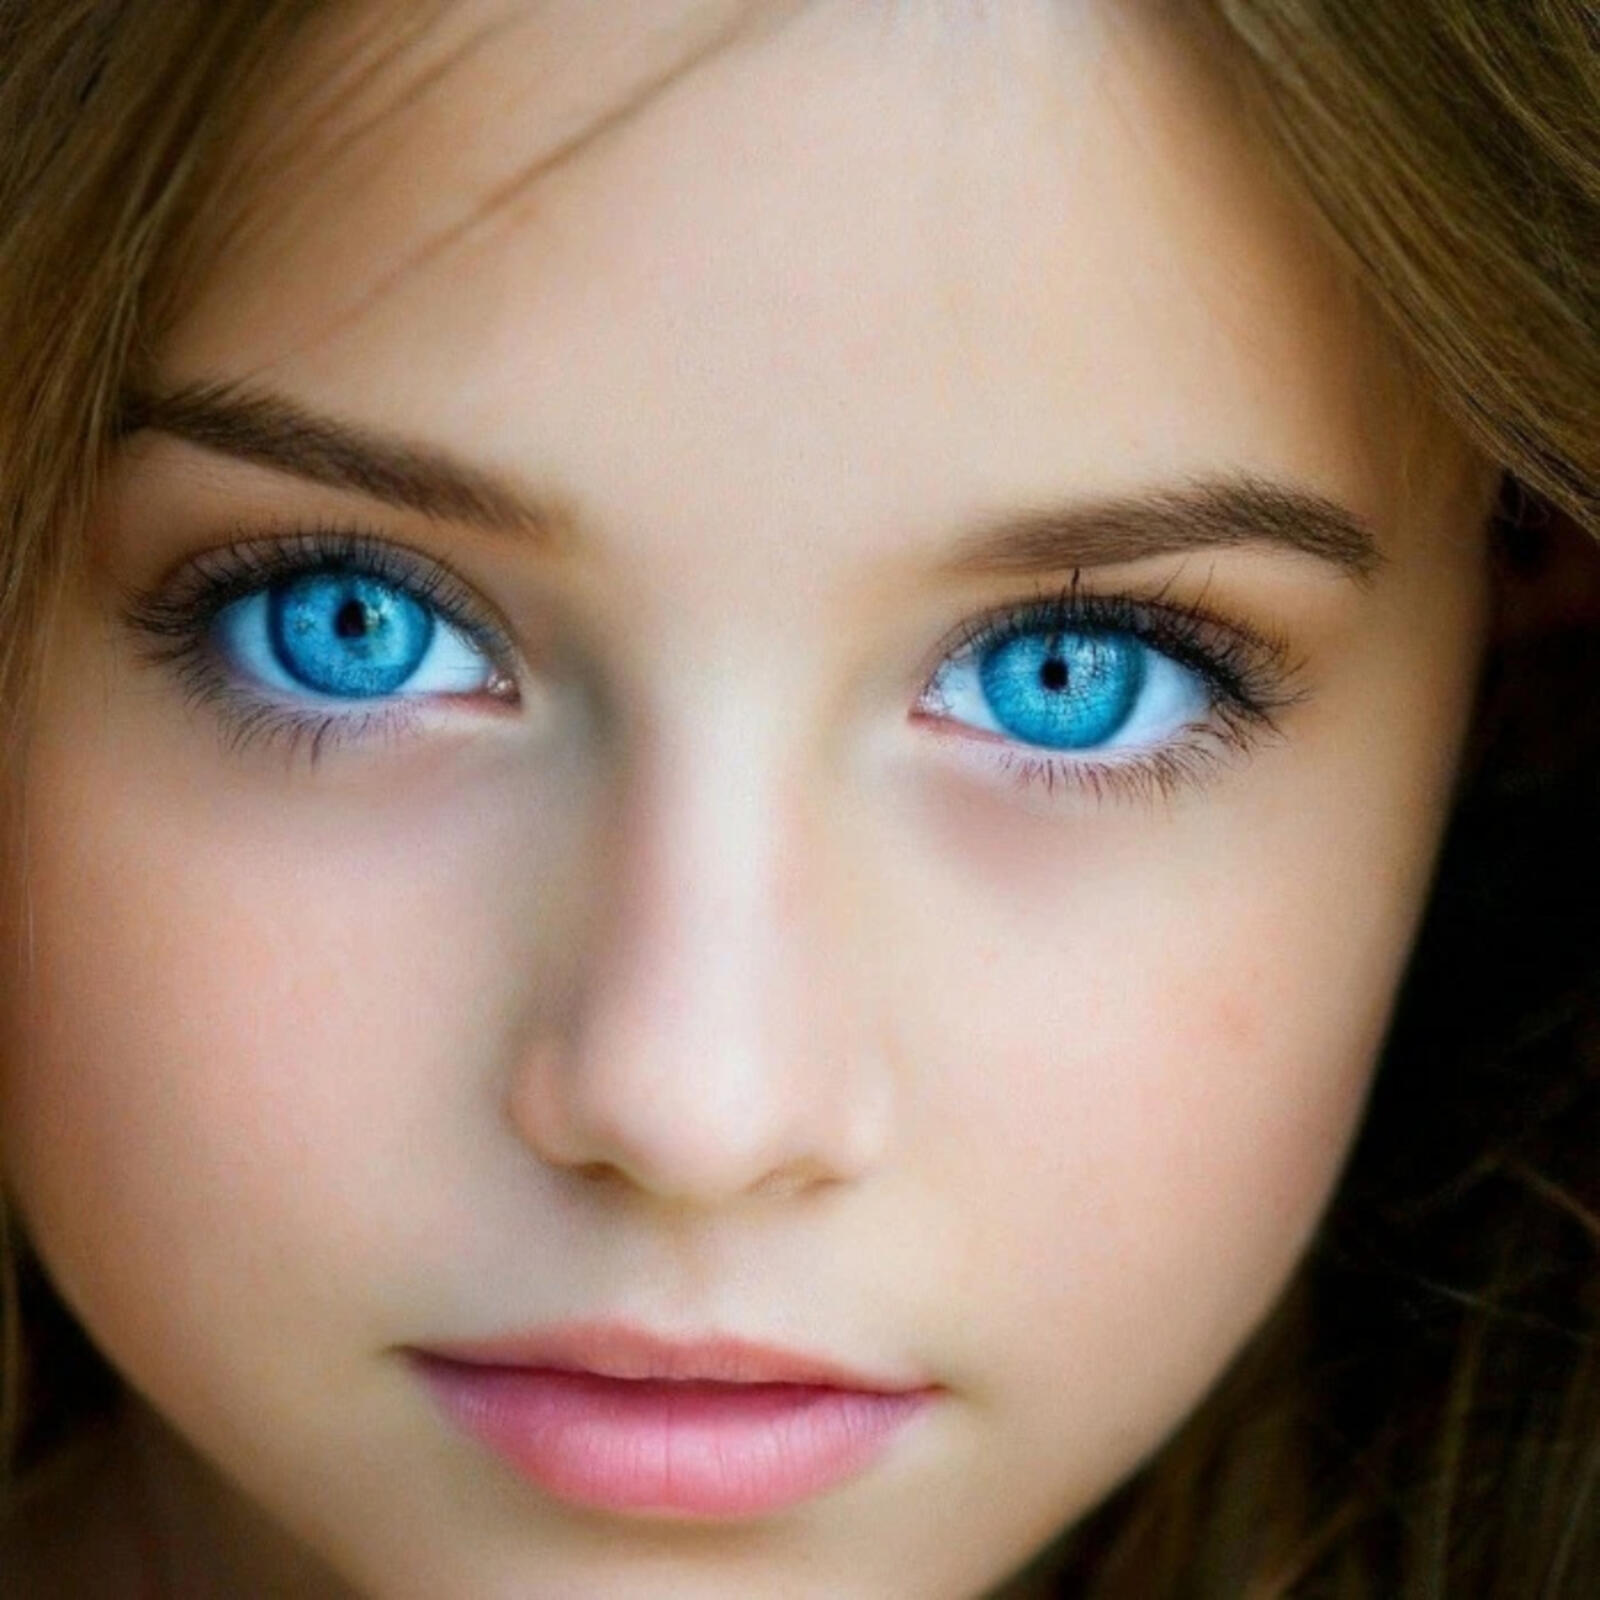 Free photo Beautiful girl with blue eyes